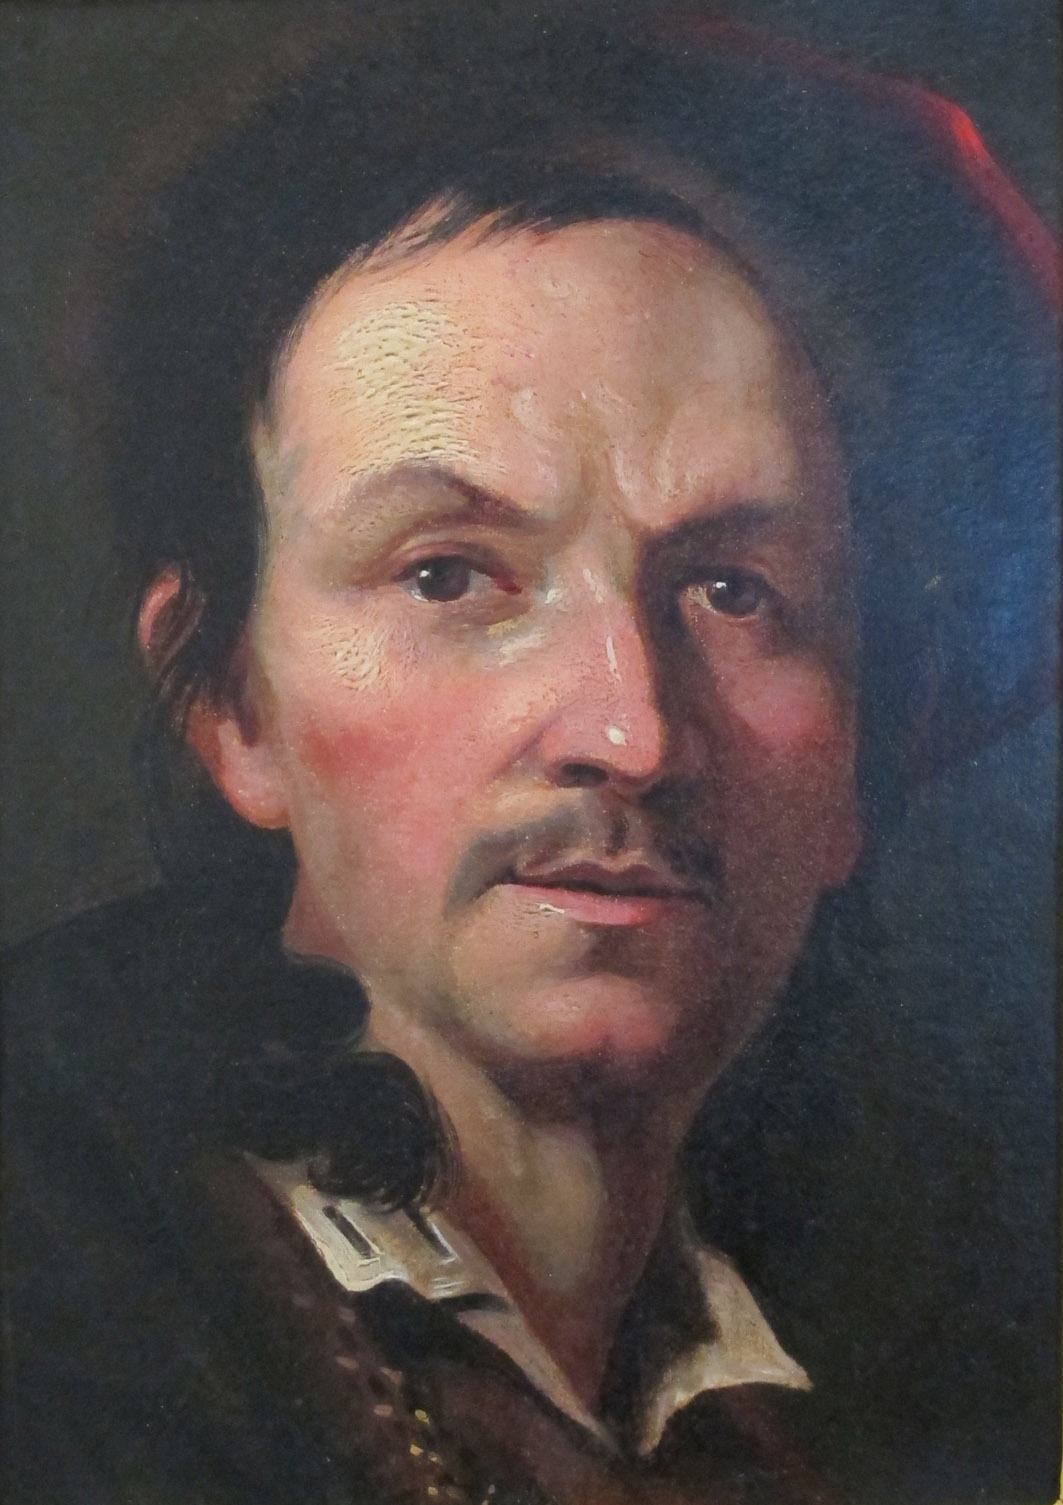 06.Johann Kupetzky, Self-portrait, c. 1700